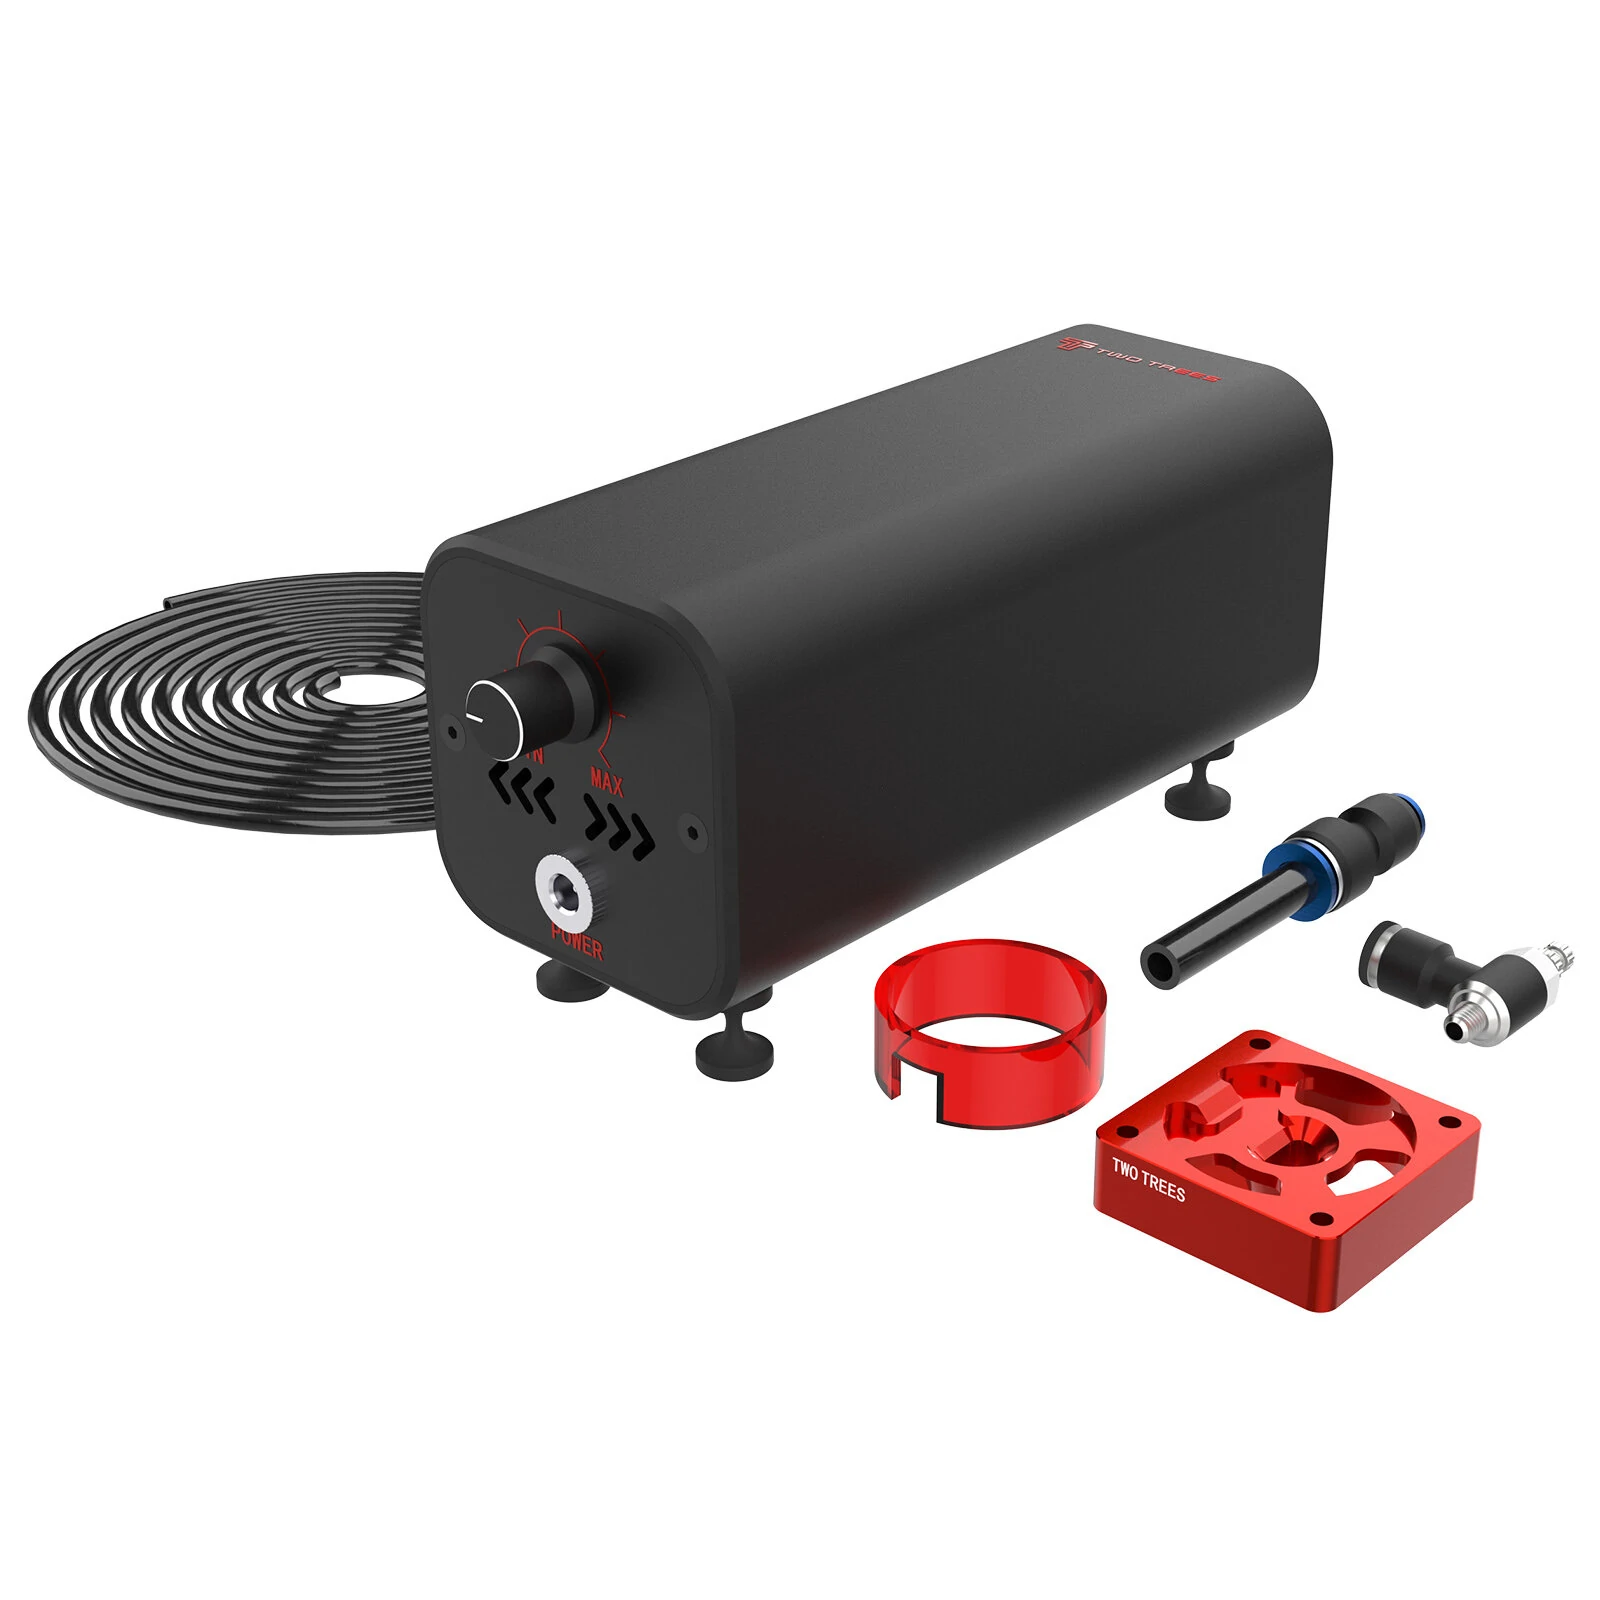 Sistema de assistência de ar de bomba de ar Geekcreit para gravadores a laser